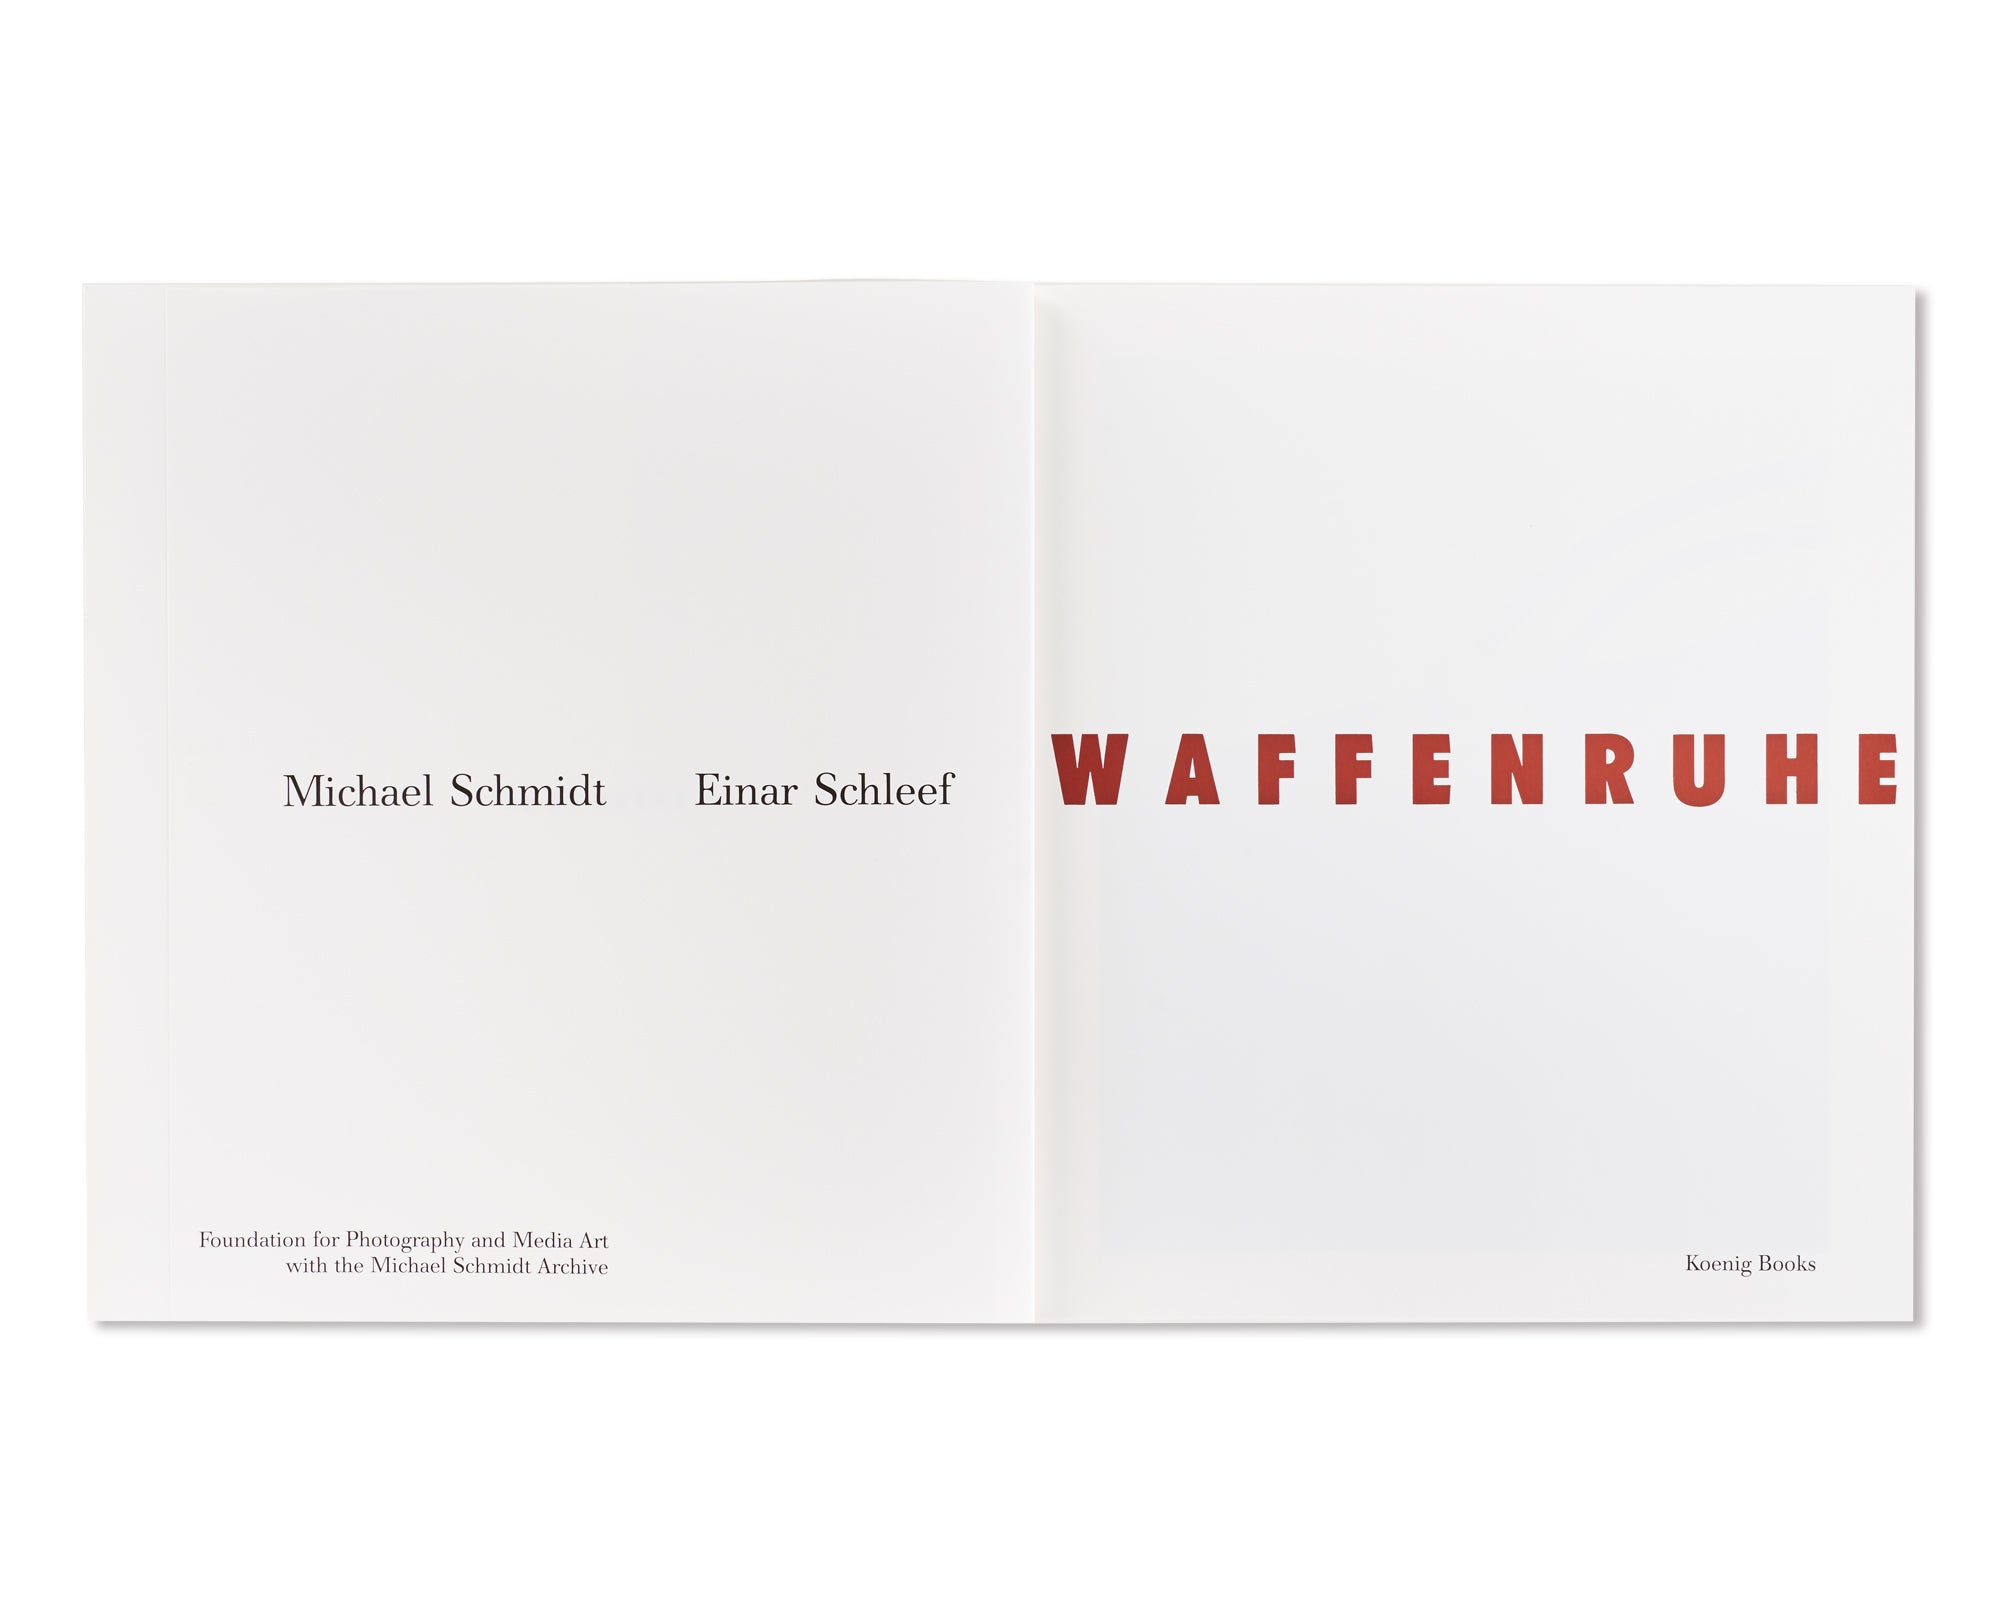 WAFFENRUHE by Michael Schmidt